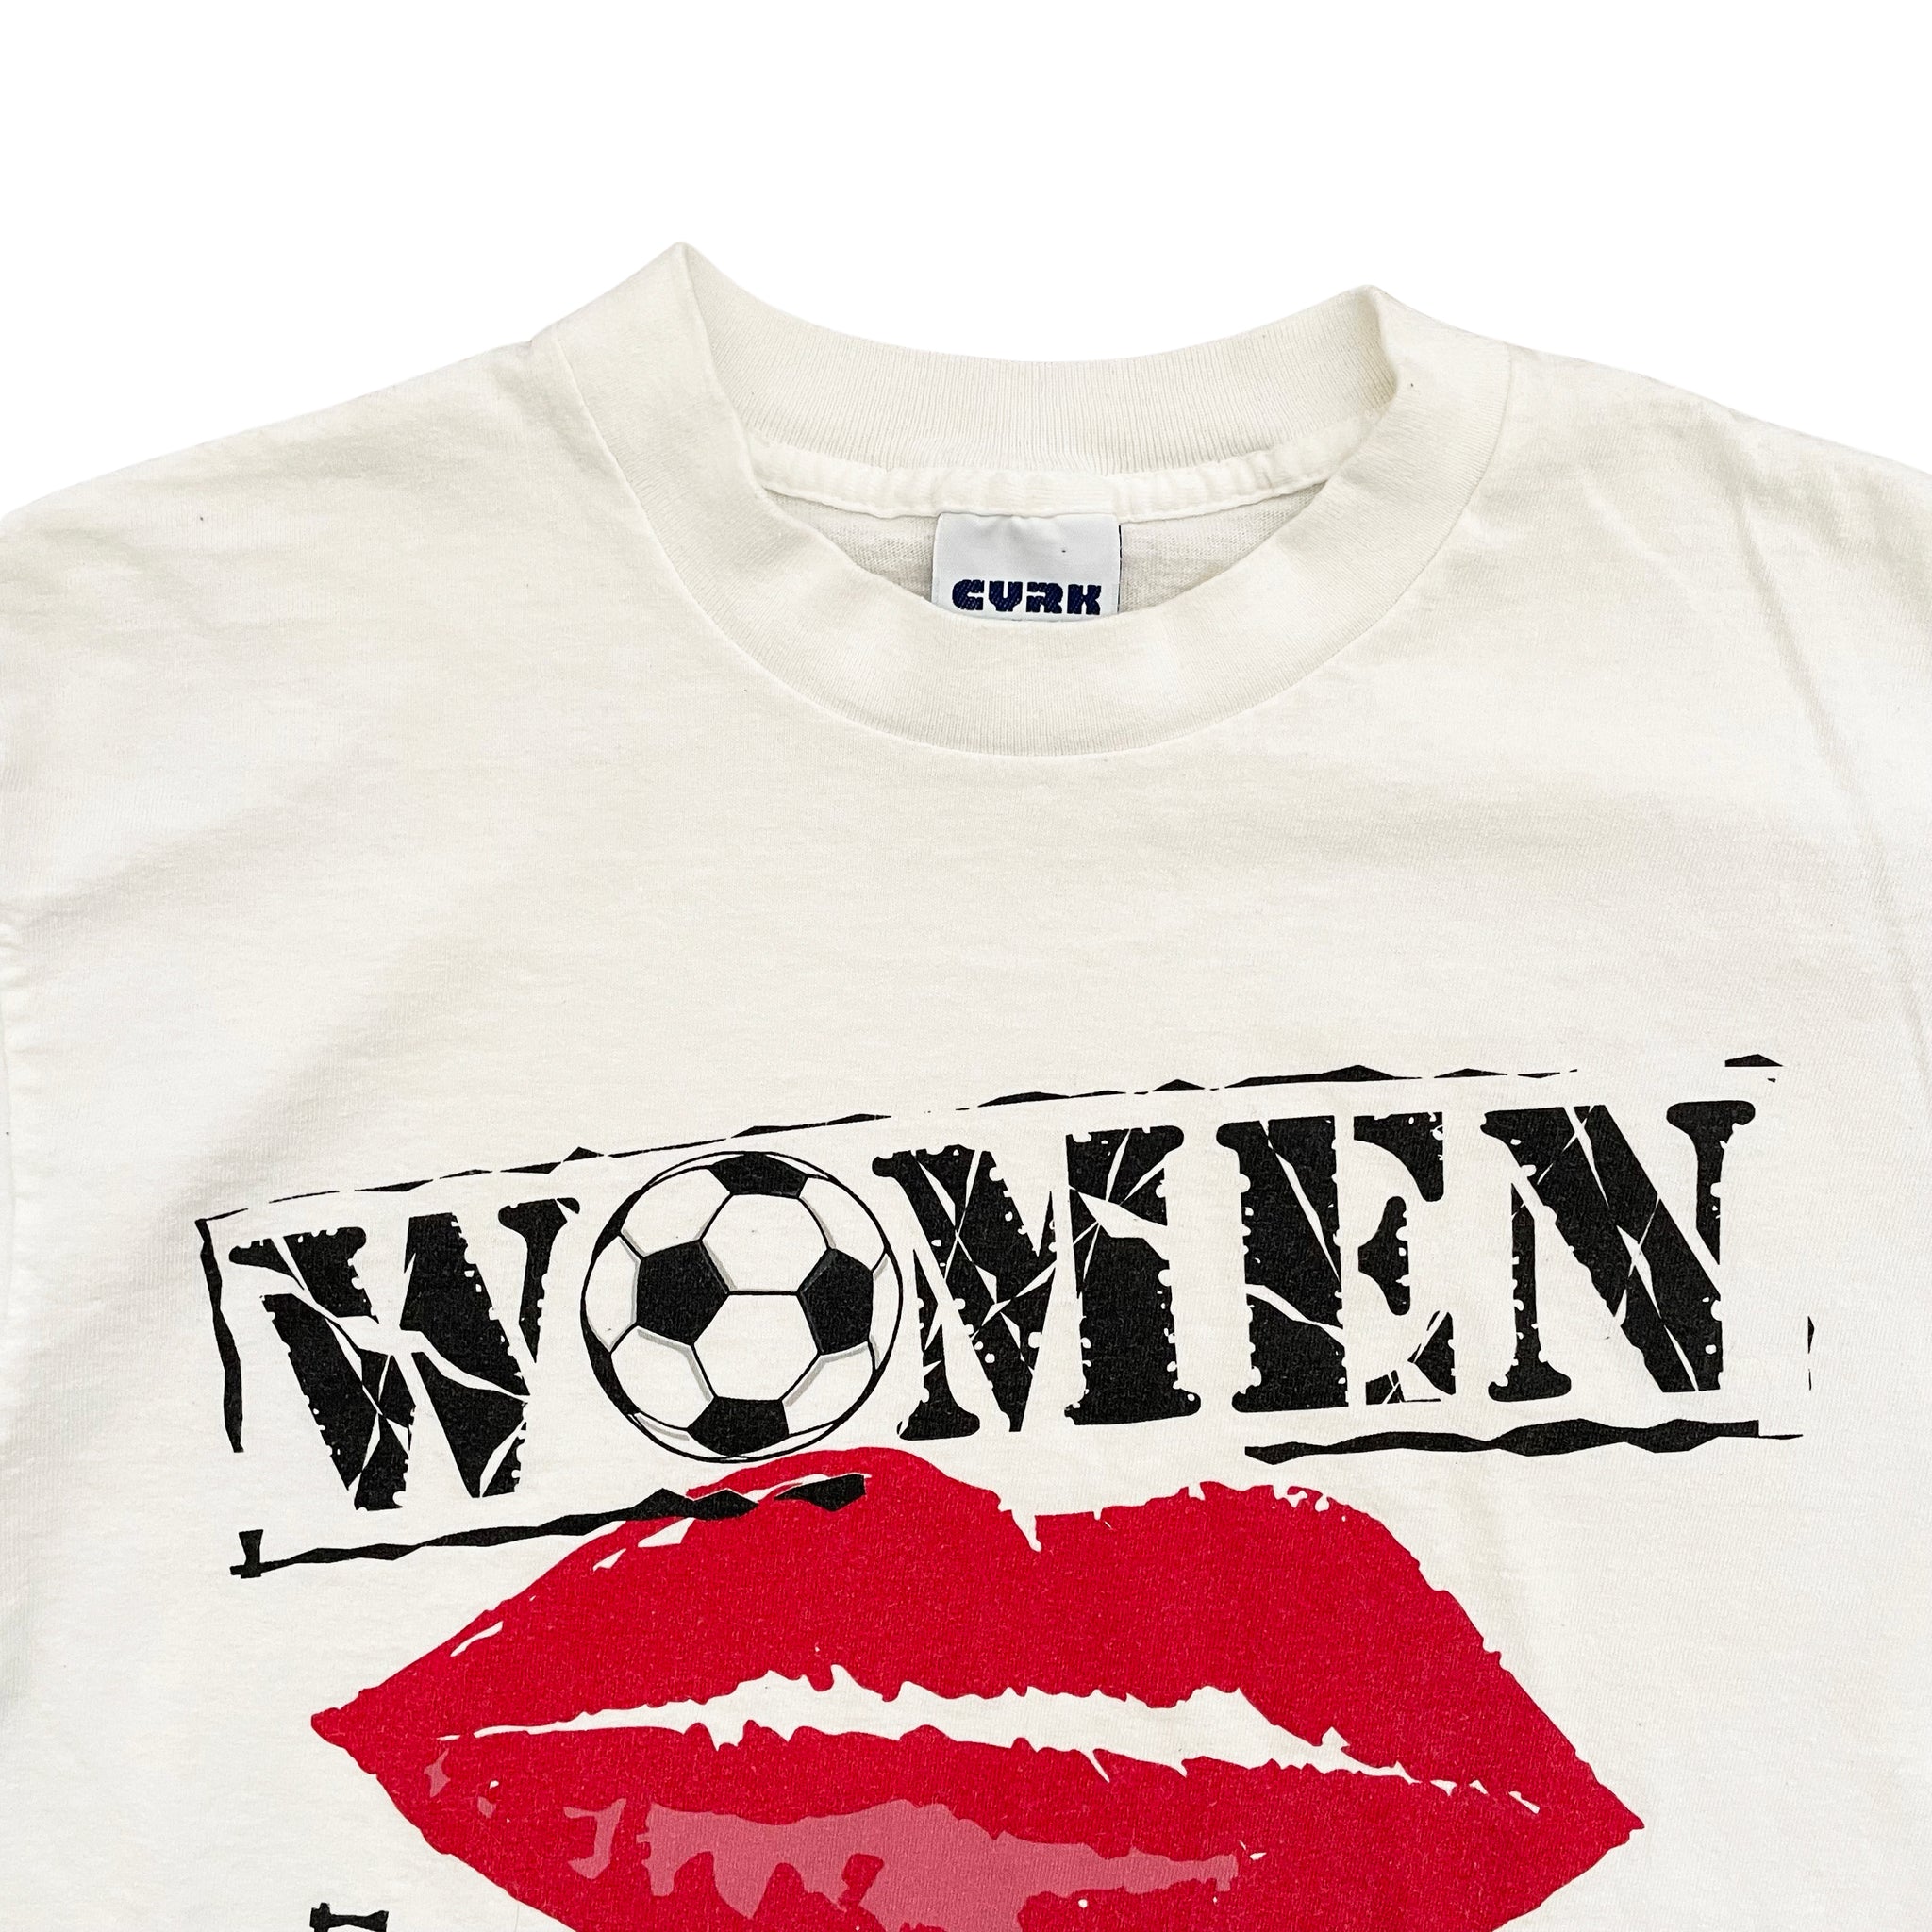 CYRK "Women Rule!" T-Shirt - M